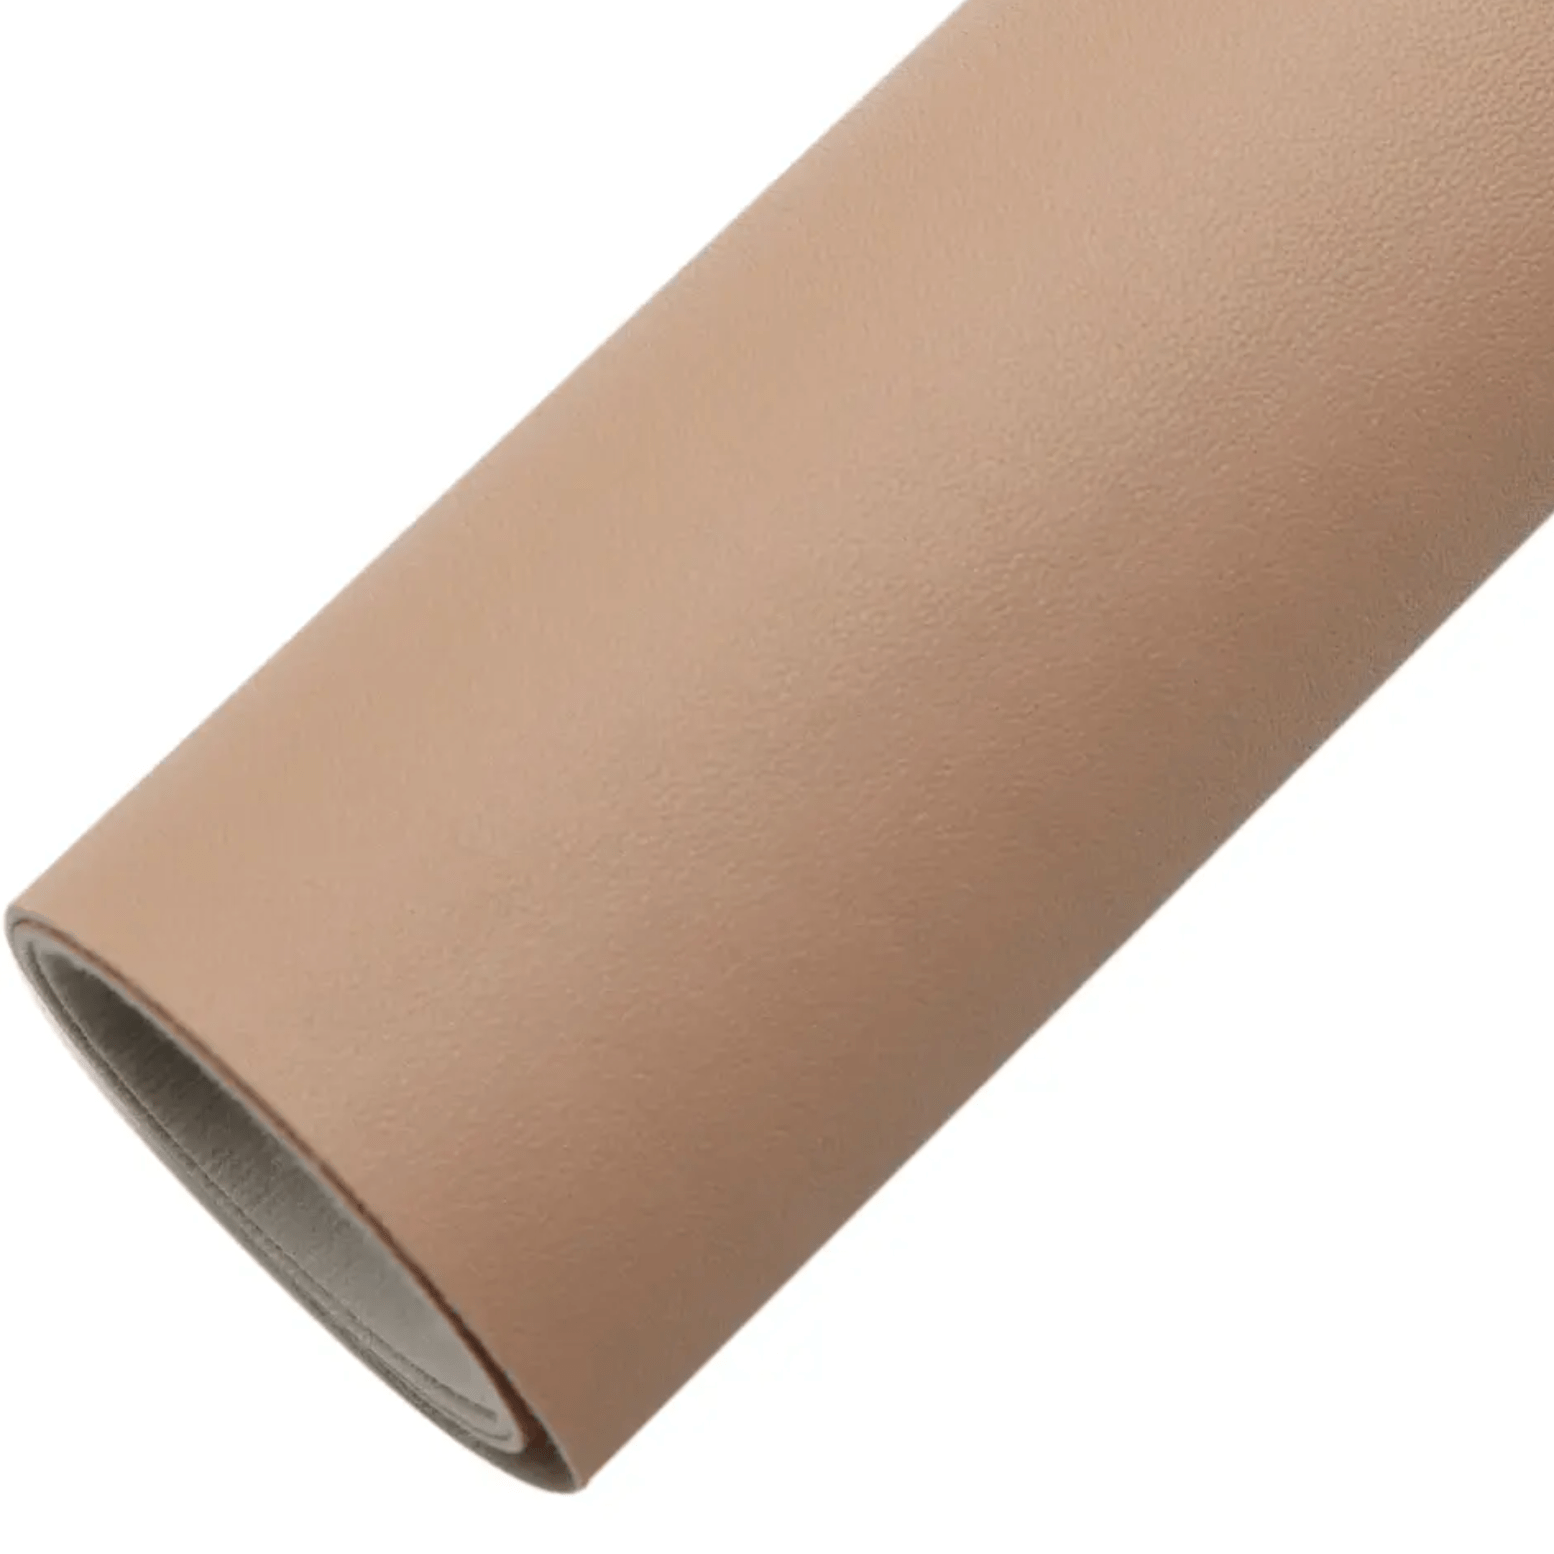 20*33cm Tan-Beige Light Brown Smooth Long Leatherette Sheet Basics Leather & Vinyl